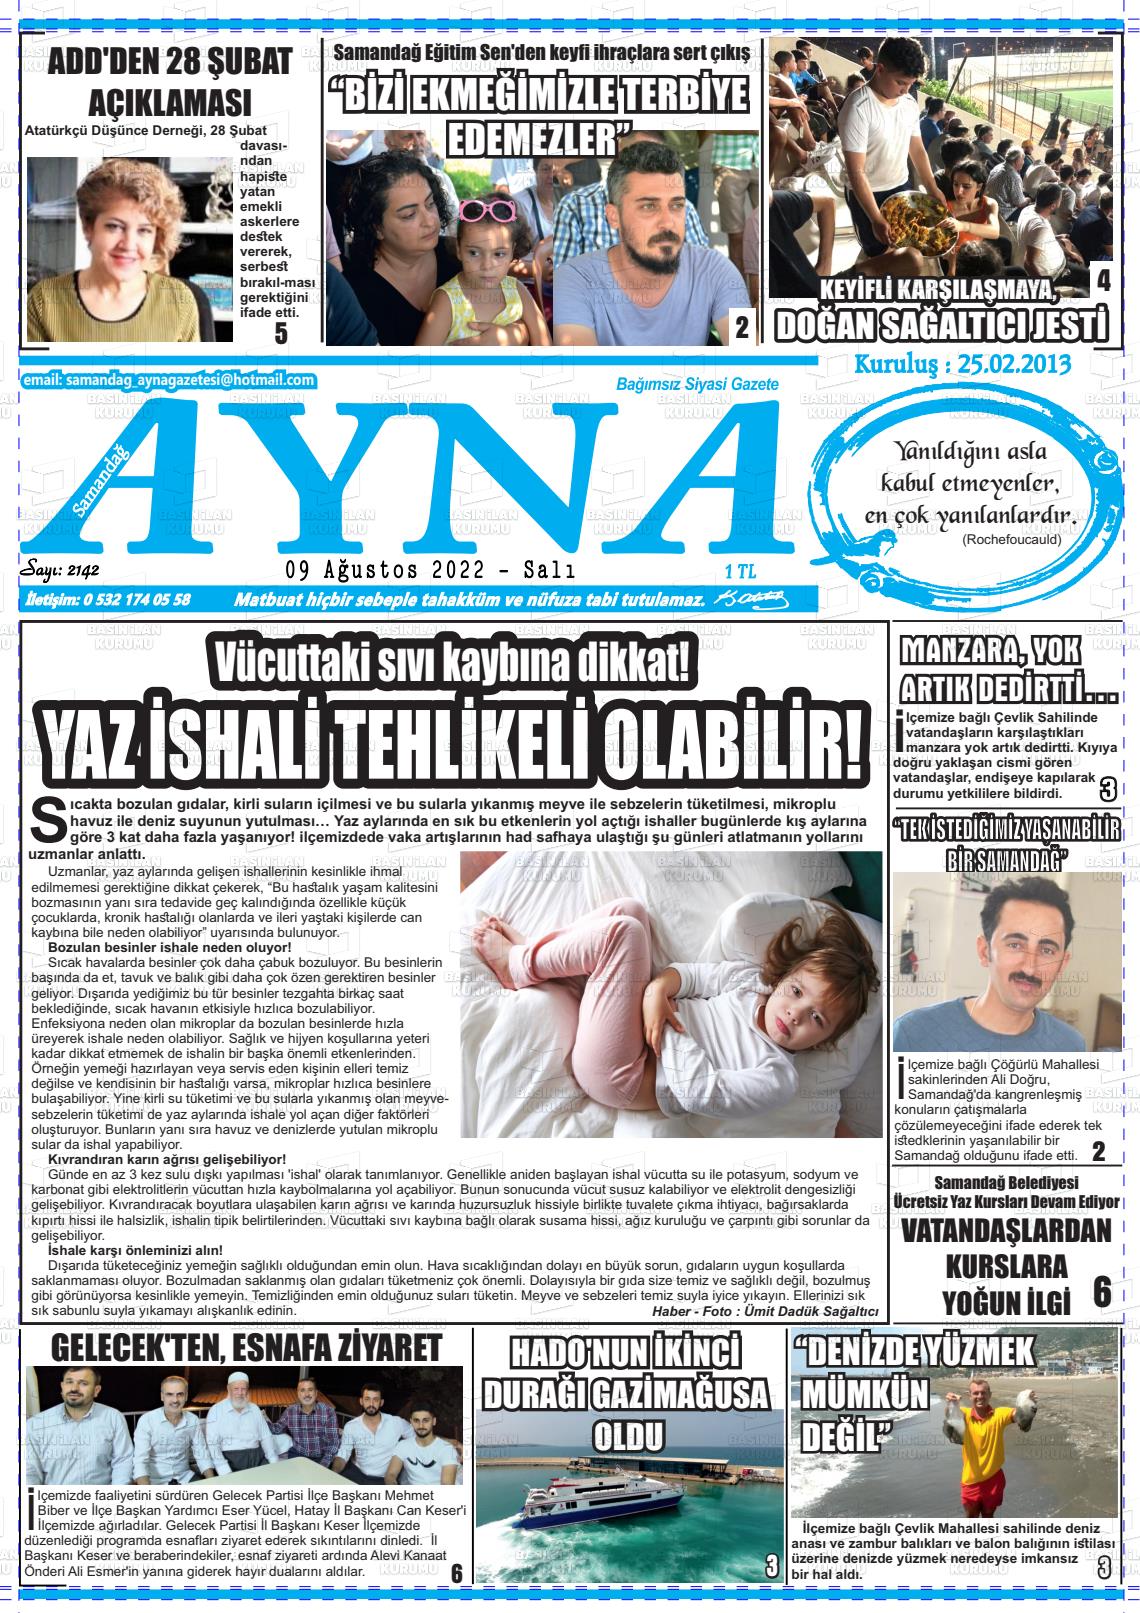 09 Ağustos 2022 Samandağ Ayna Gazete Manşeti